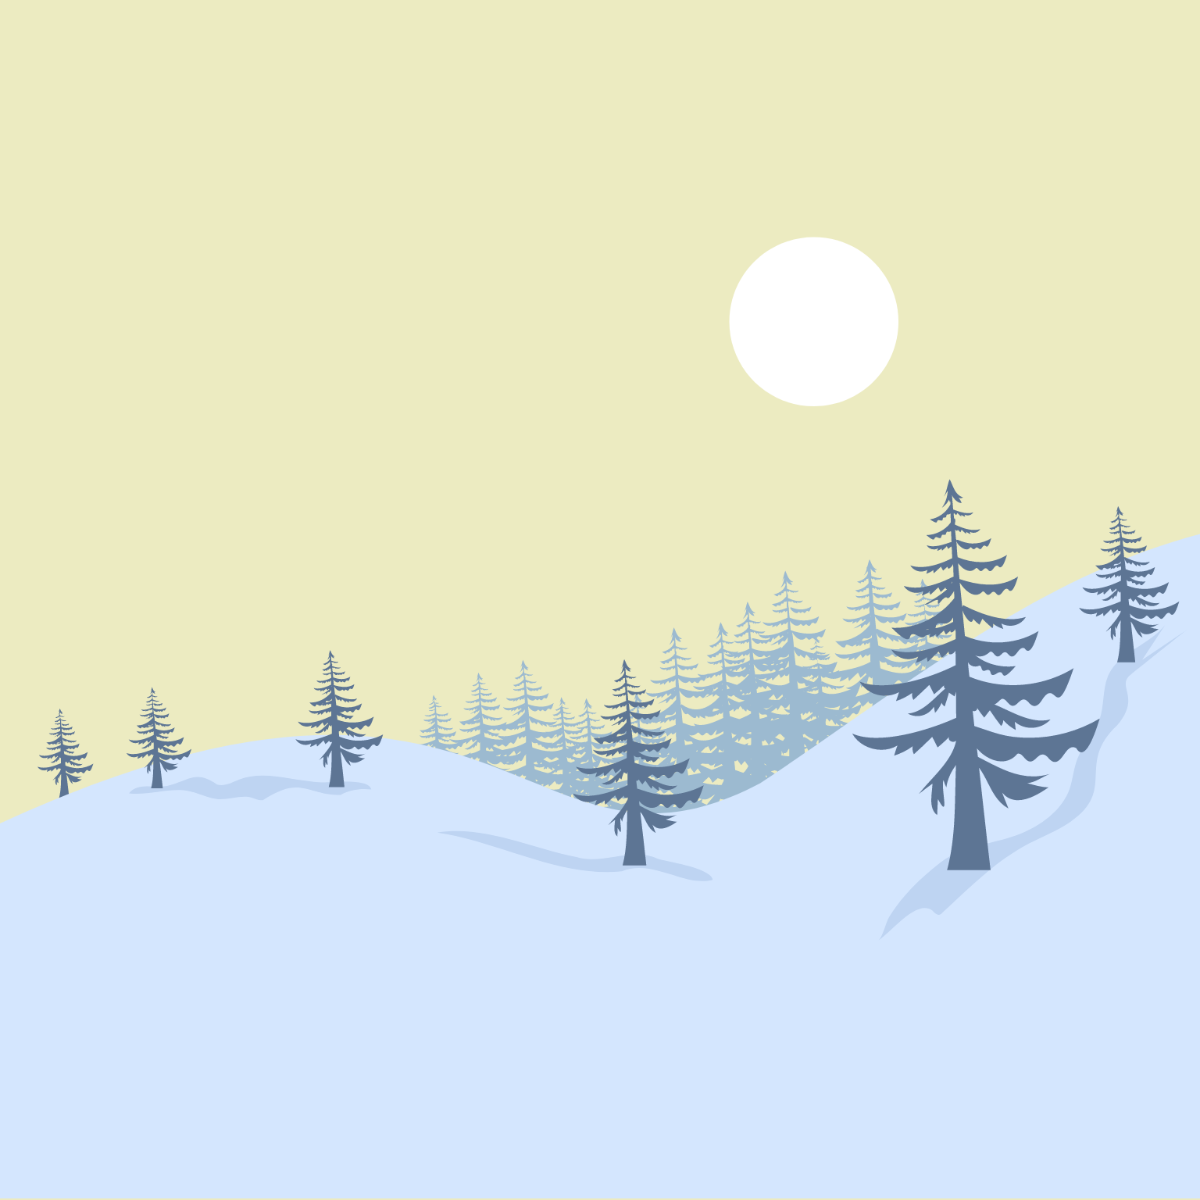 Free Winter Solstice Illustration Template